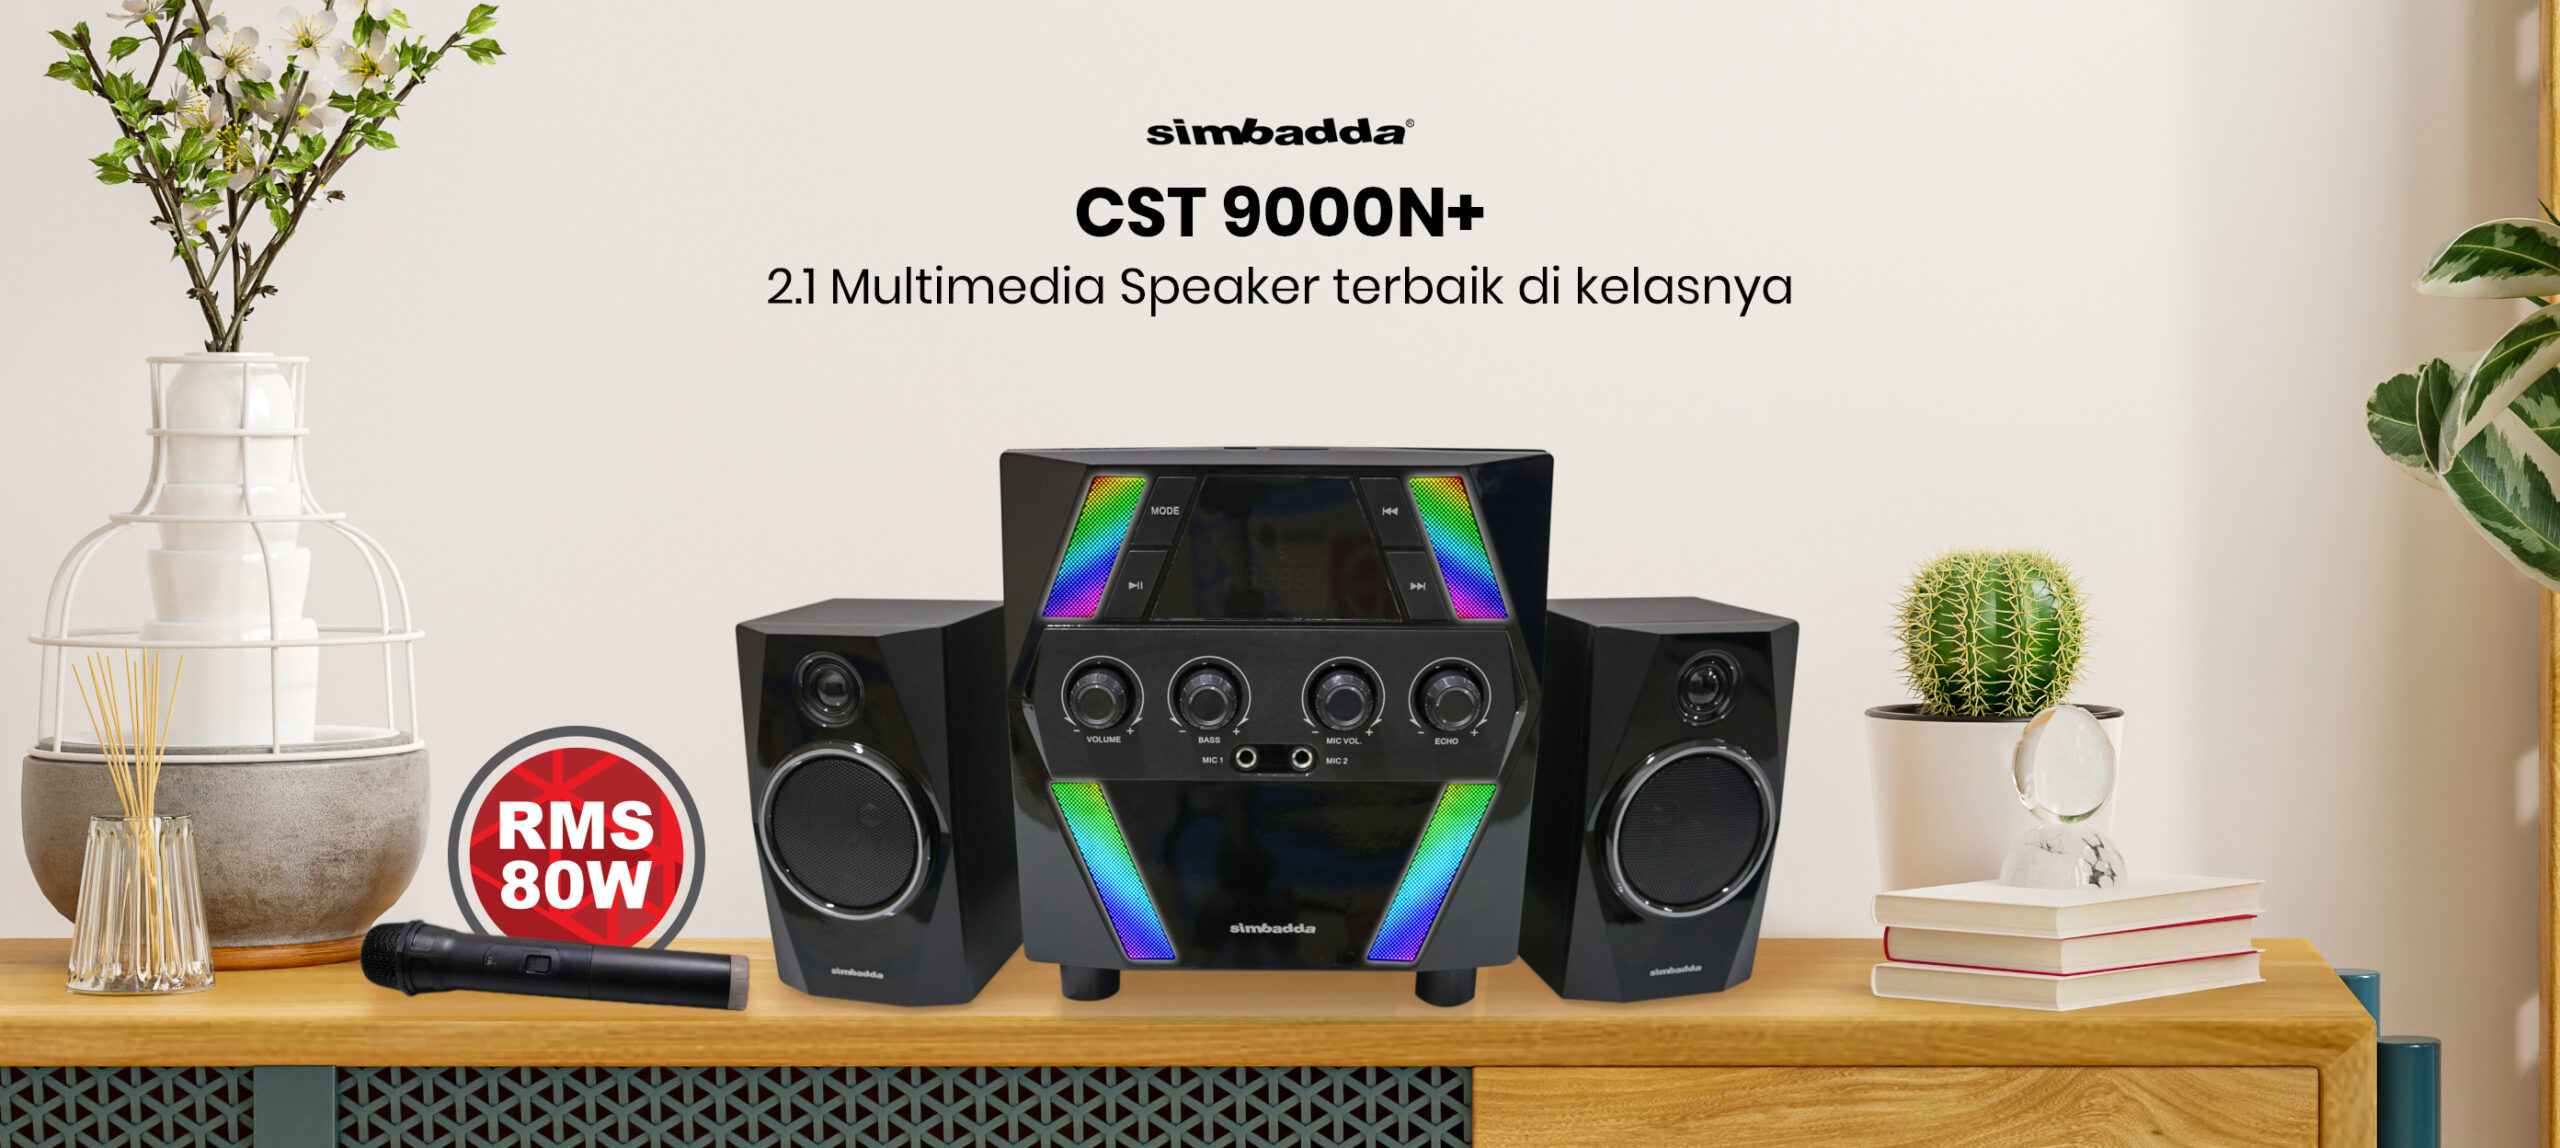 2.1 Speaker CST 9000N+